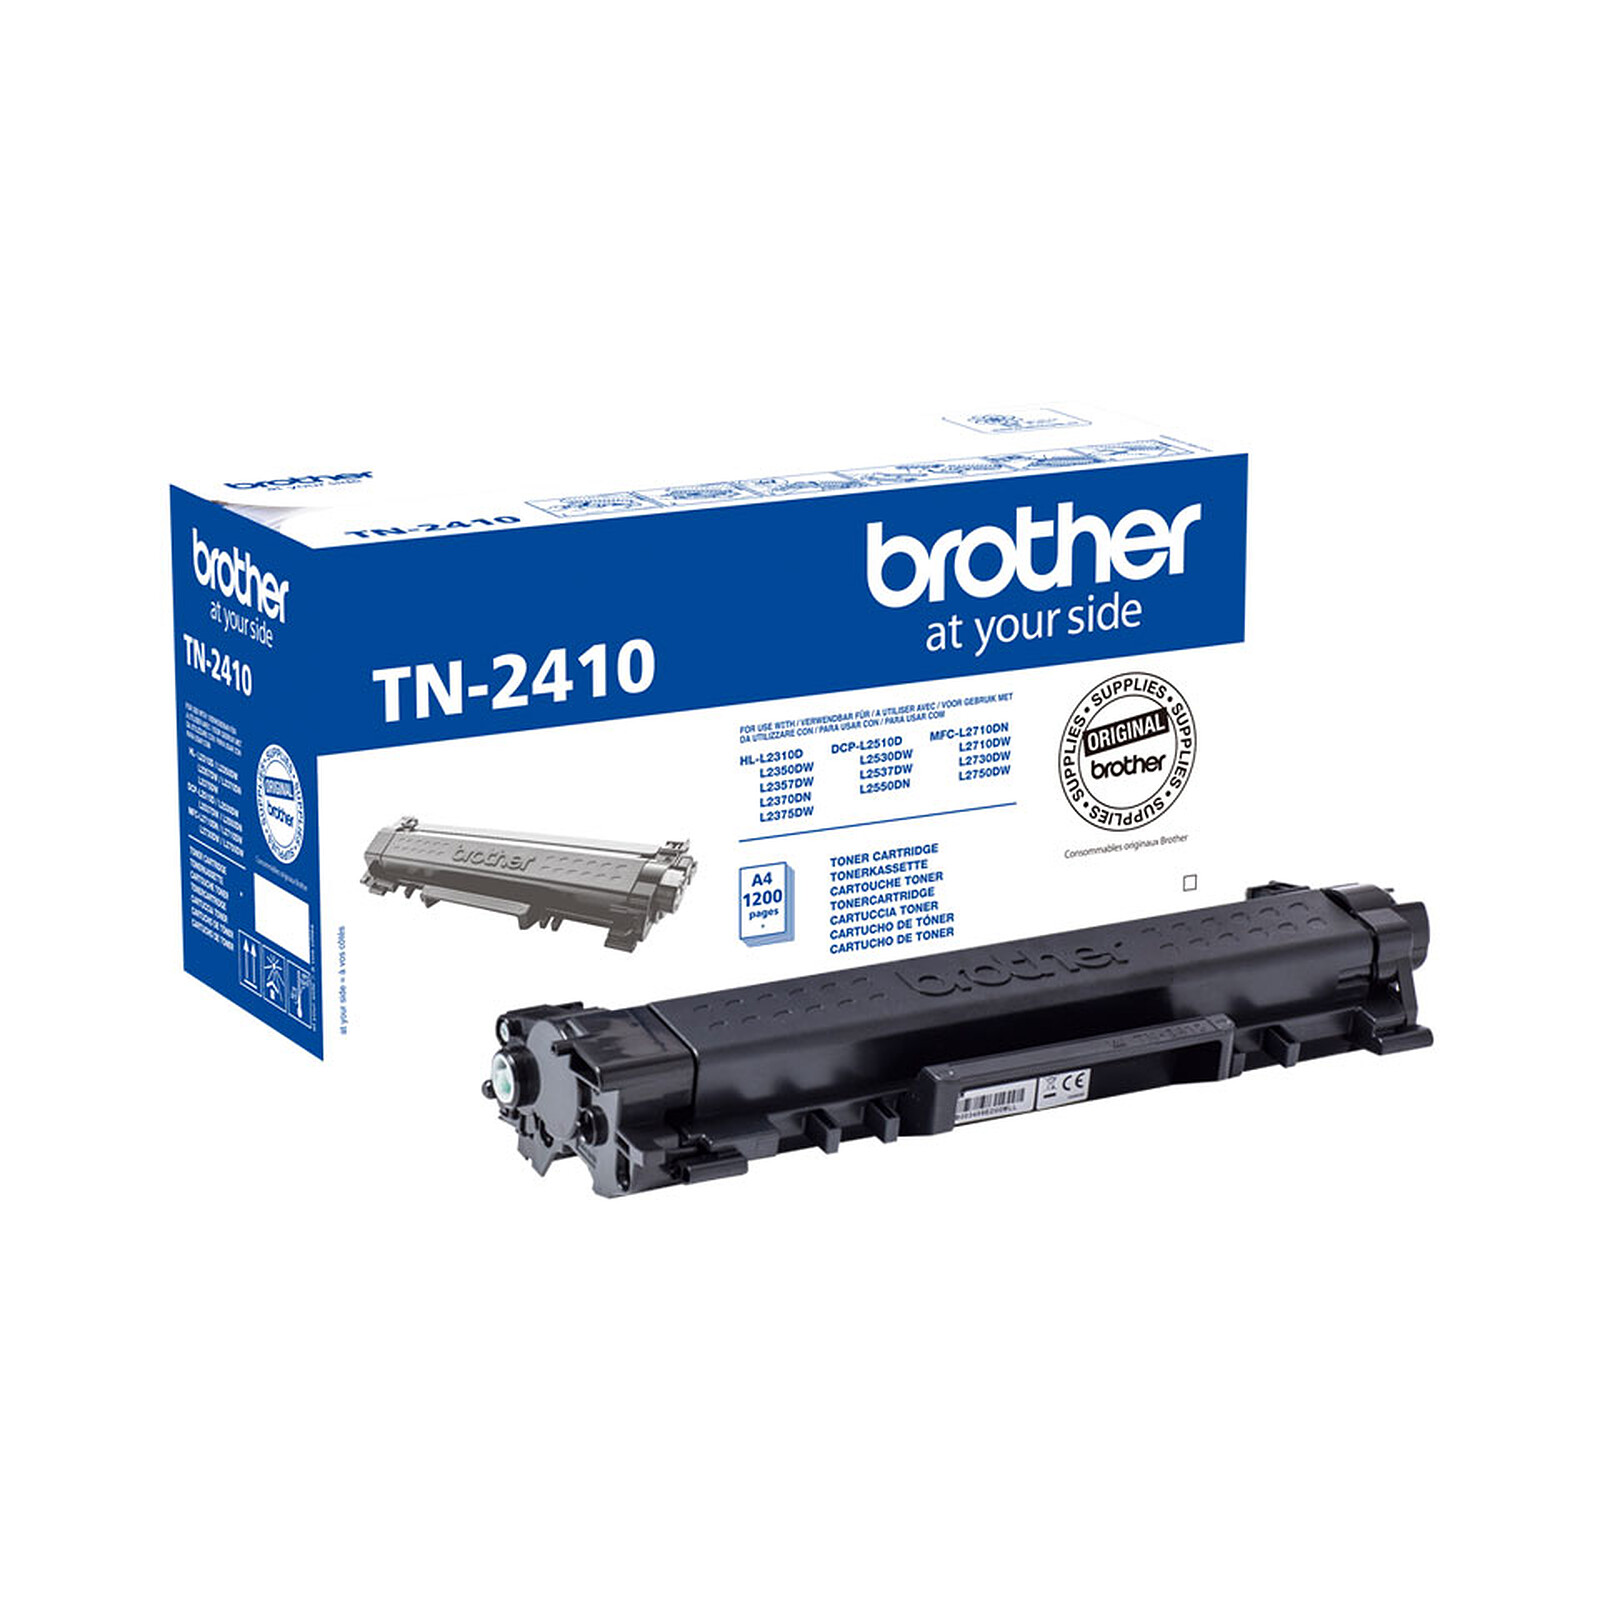 Multifonction laser 4 en 1 Brother MFC-L2730DW + toner noir TN 2410 sur